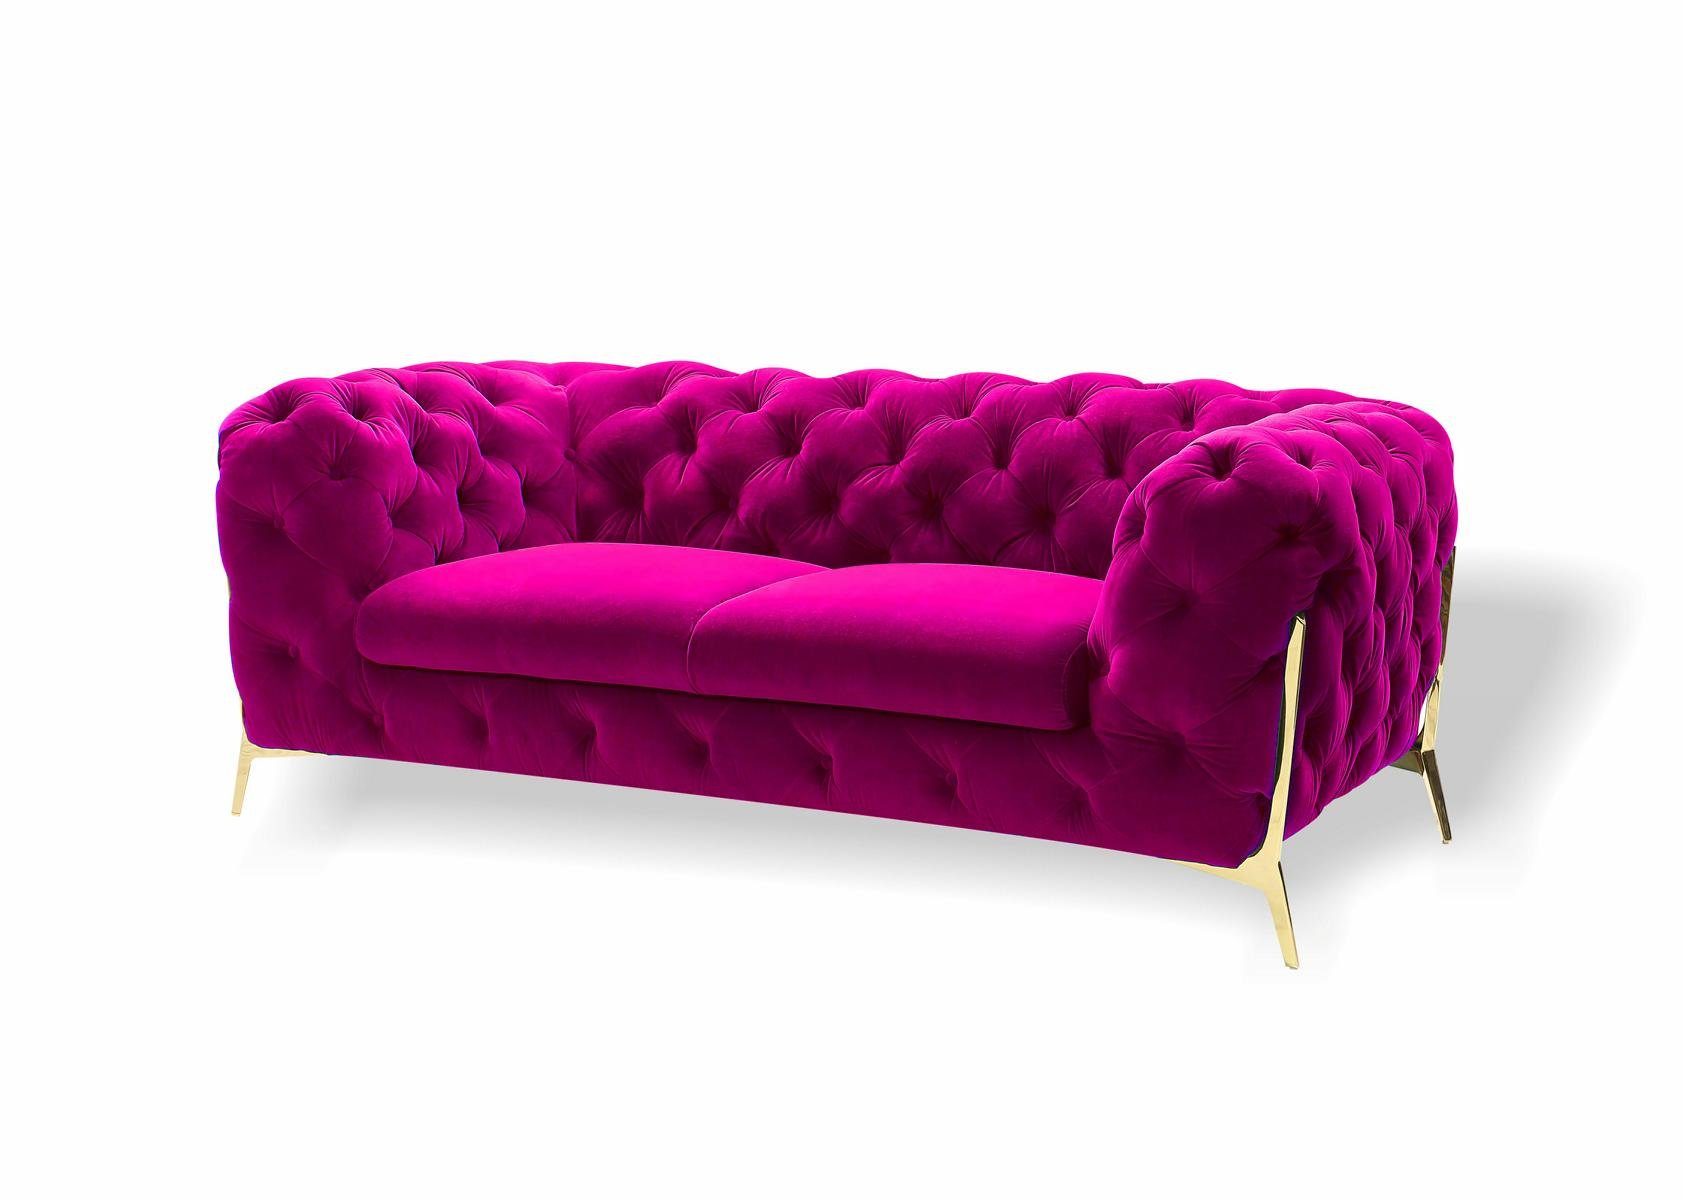 JVmoebel 2-Sitzer Sofa 2 Sitzer Klassische Chesterfield Sofas Couchen Polster, Made in Europa Rosa